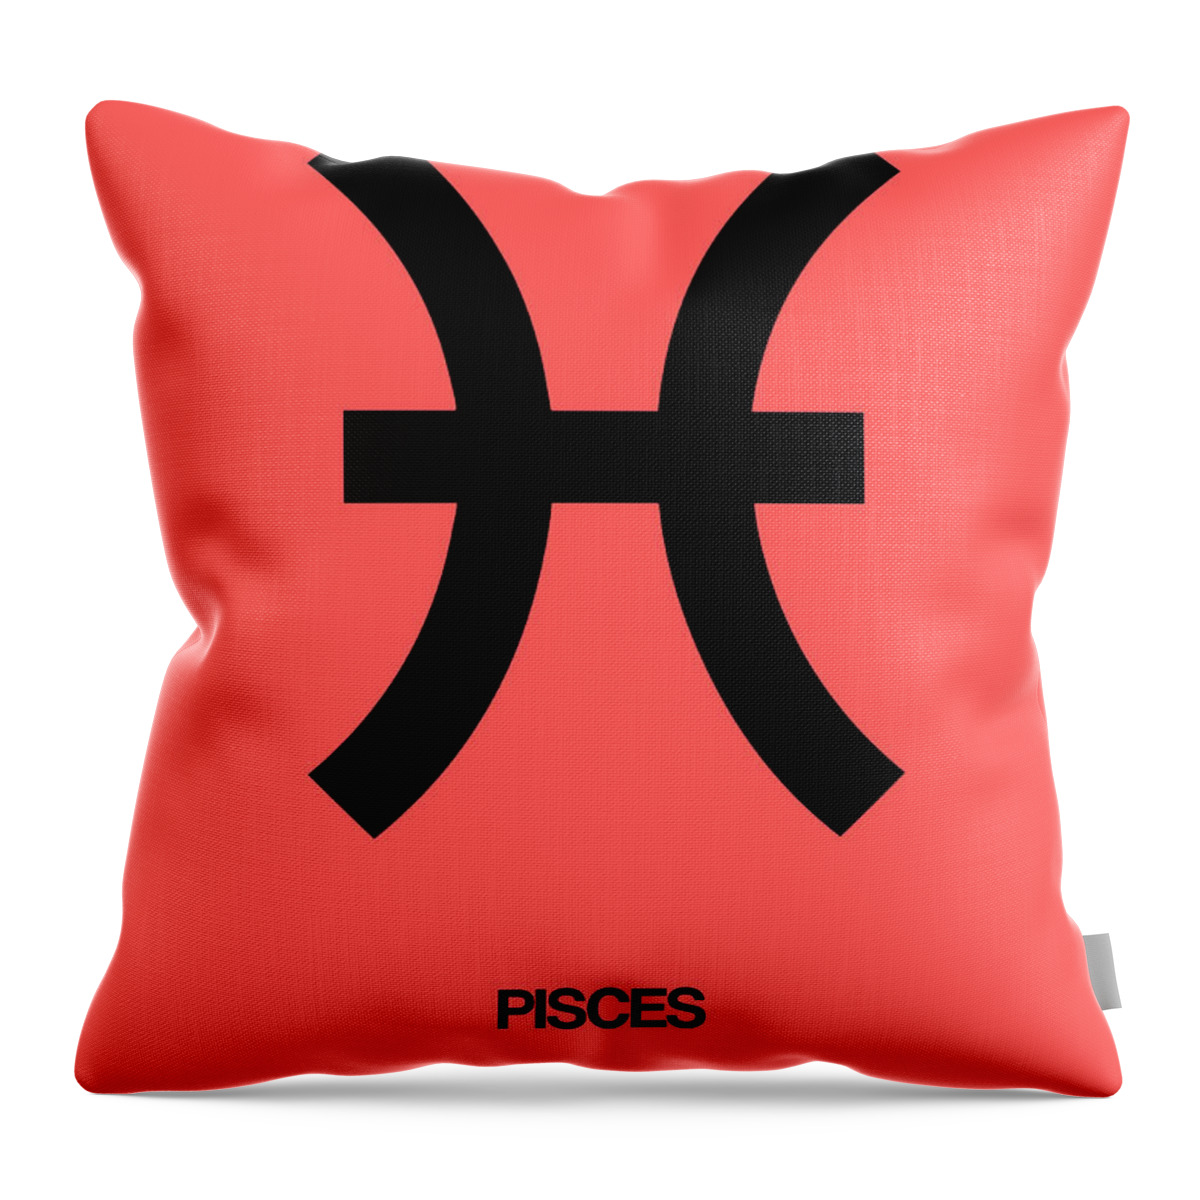 Pisces Throw Pillow featuring the digital art Pisces Zodiac Sign Black by Naxart Studio